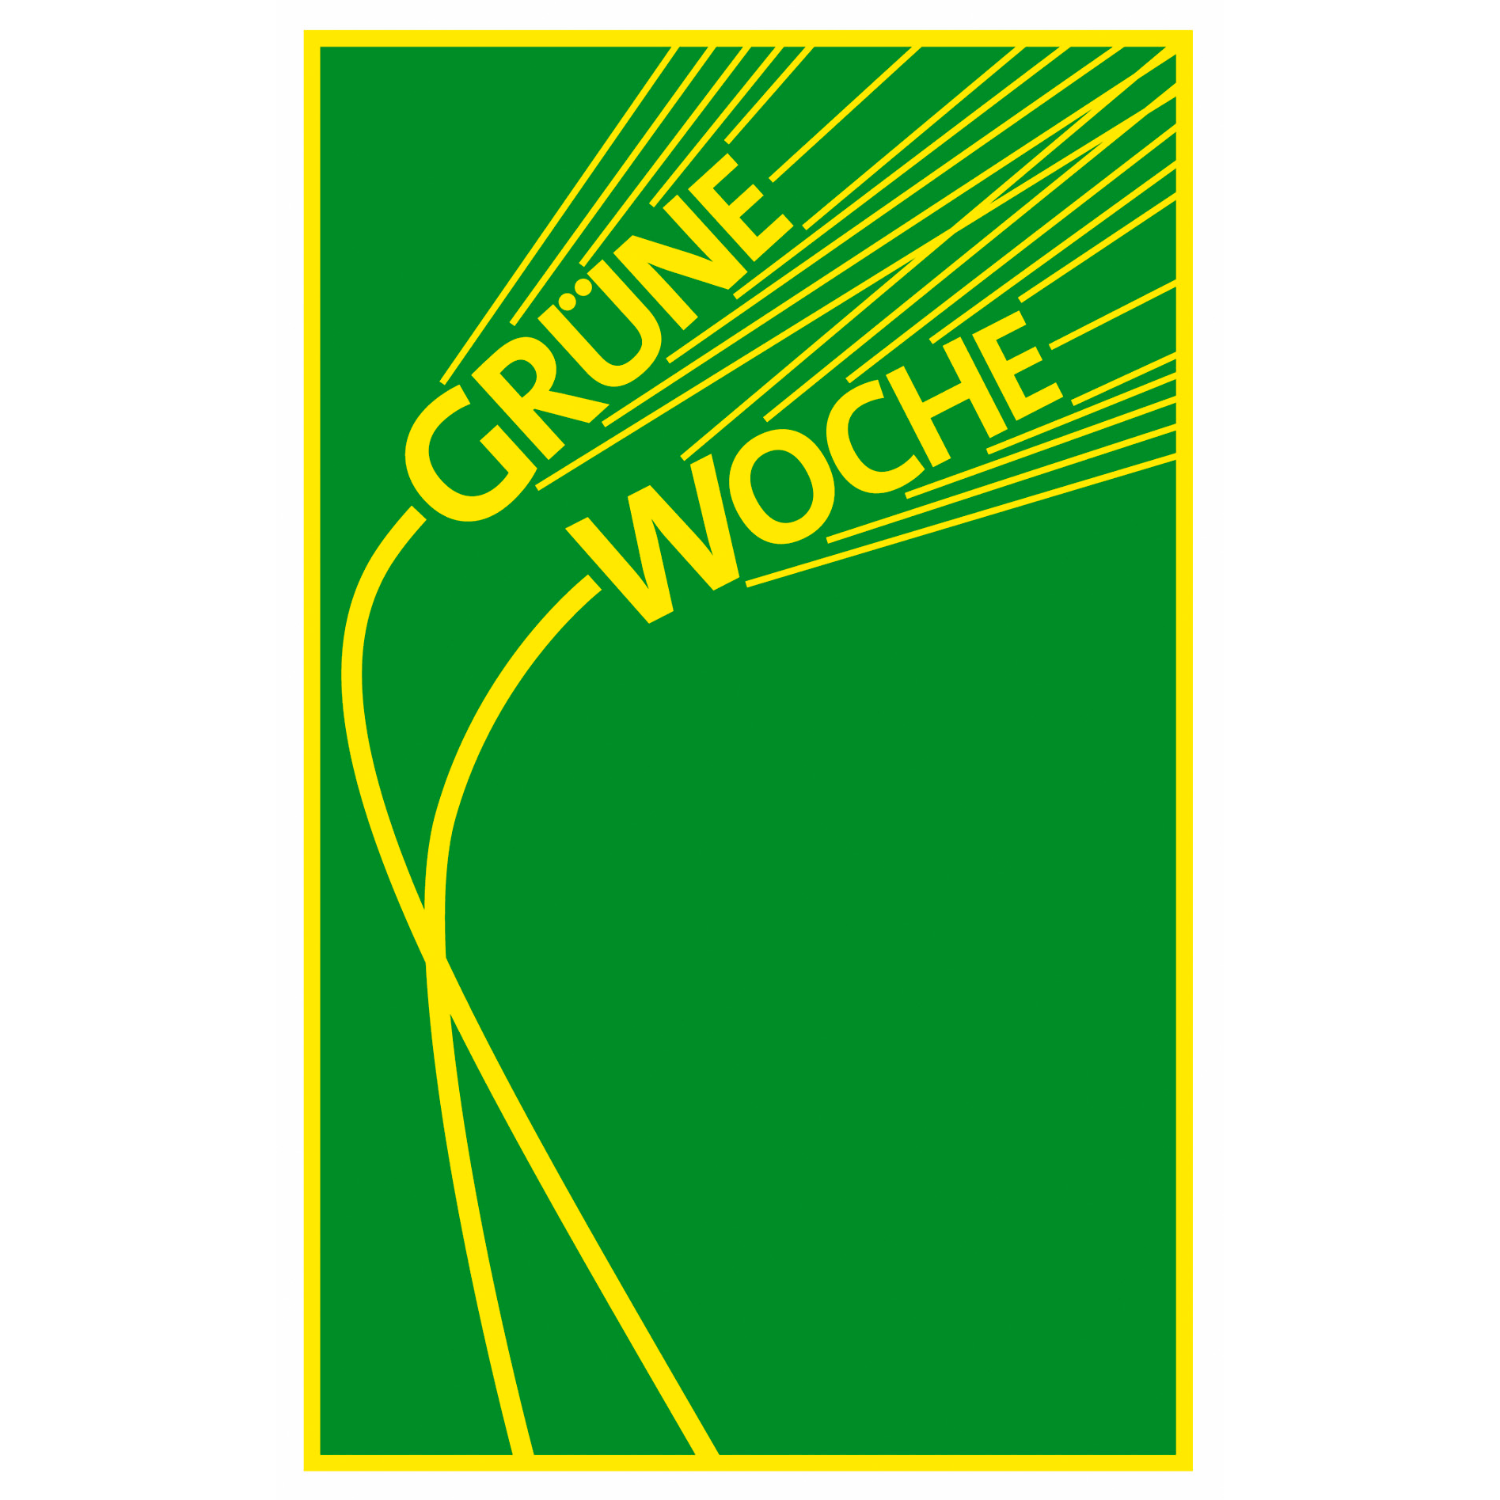 gruene-woche-logo-sqr